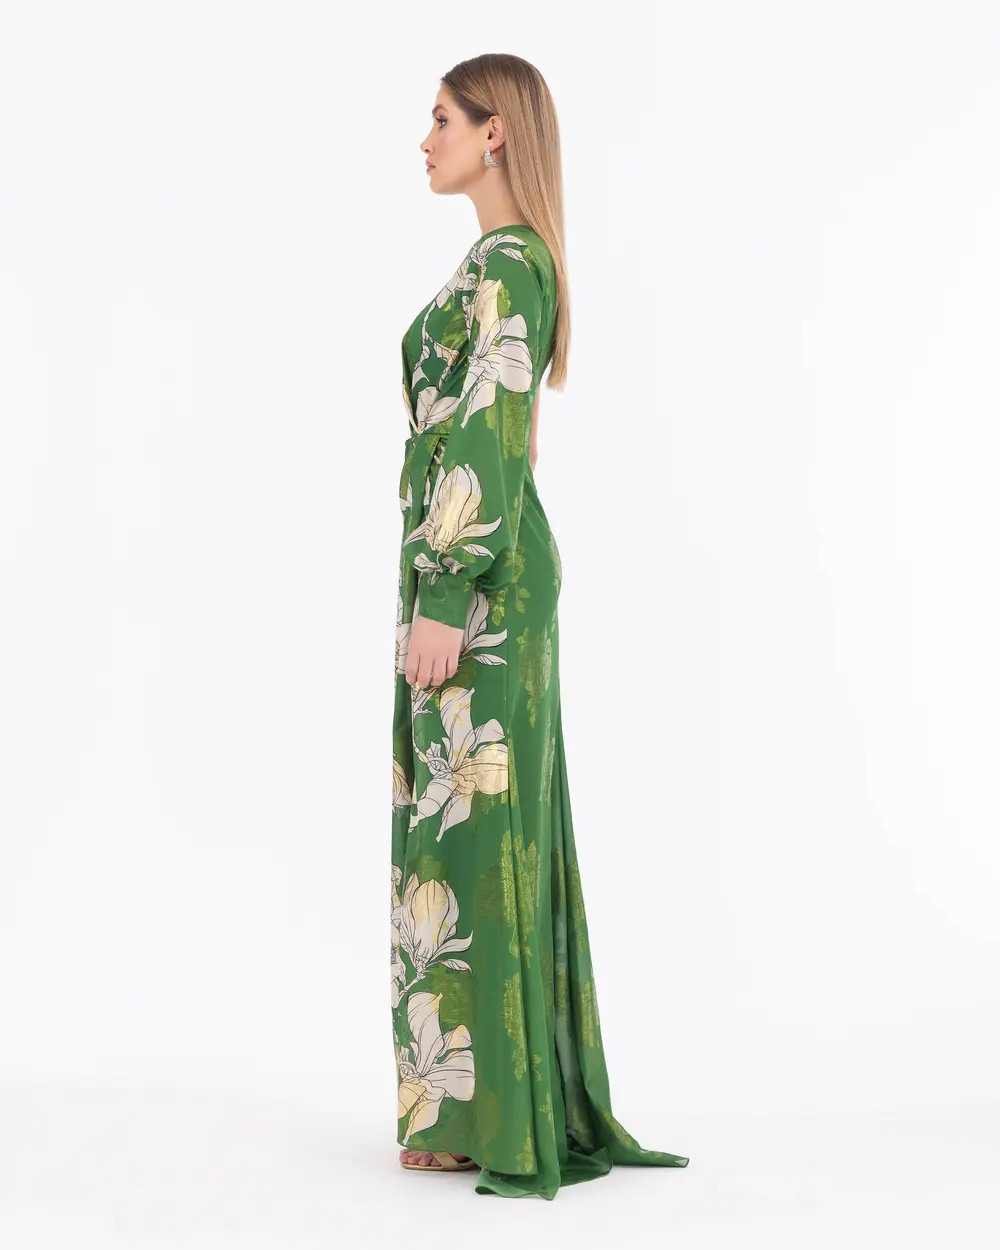 Floral Patterned Single Sleeve Asymmetrical Collar Evening Dress